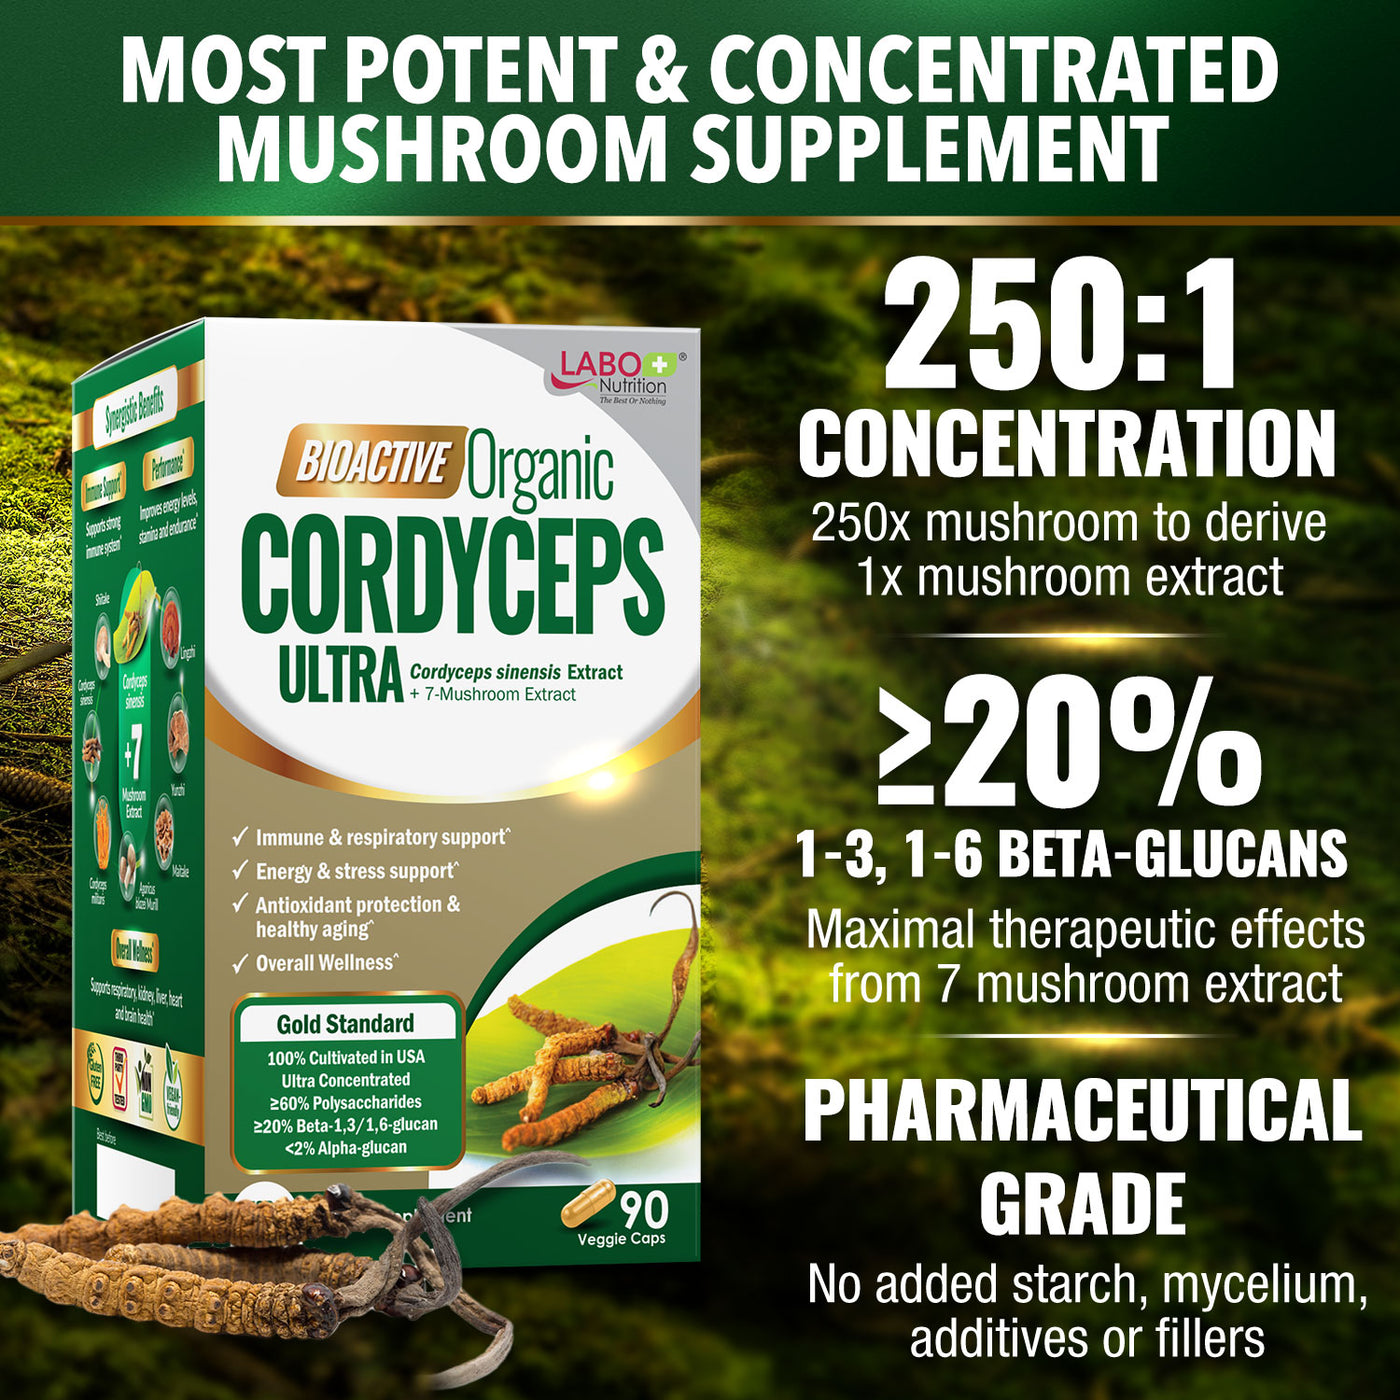 LABO Nutrition Bioactive Organic Cordyceps Ultra – 8 Medicinal Mushroom Supplement, for Immunity, Energy, Stamina, No Fillers - Lifestream Group US